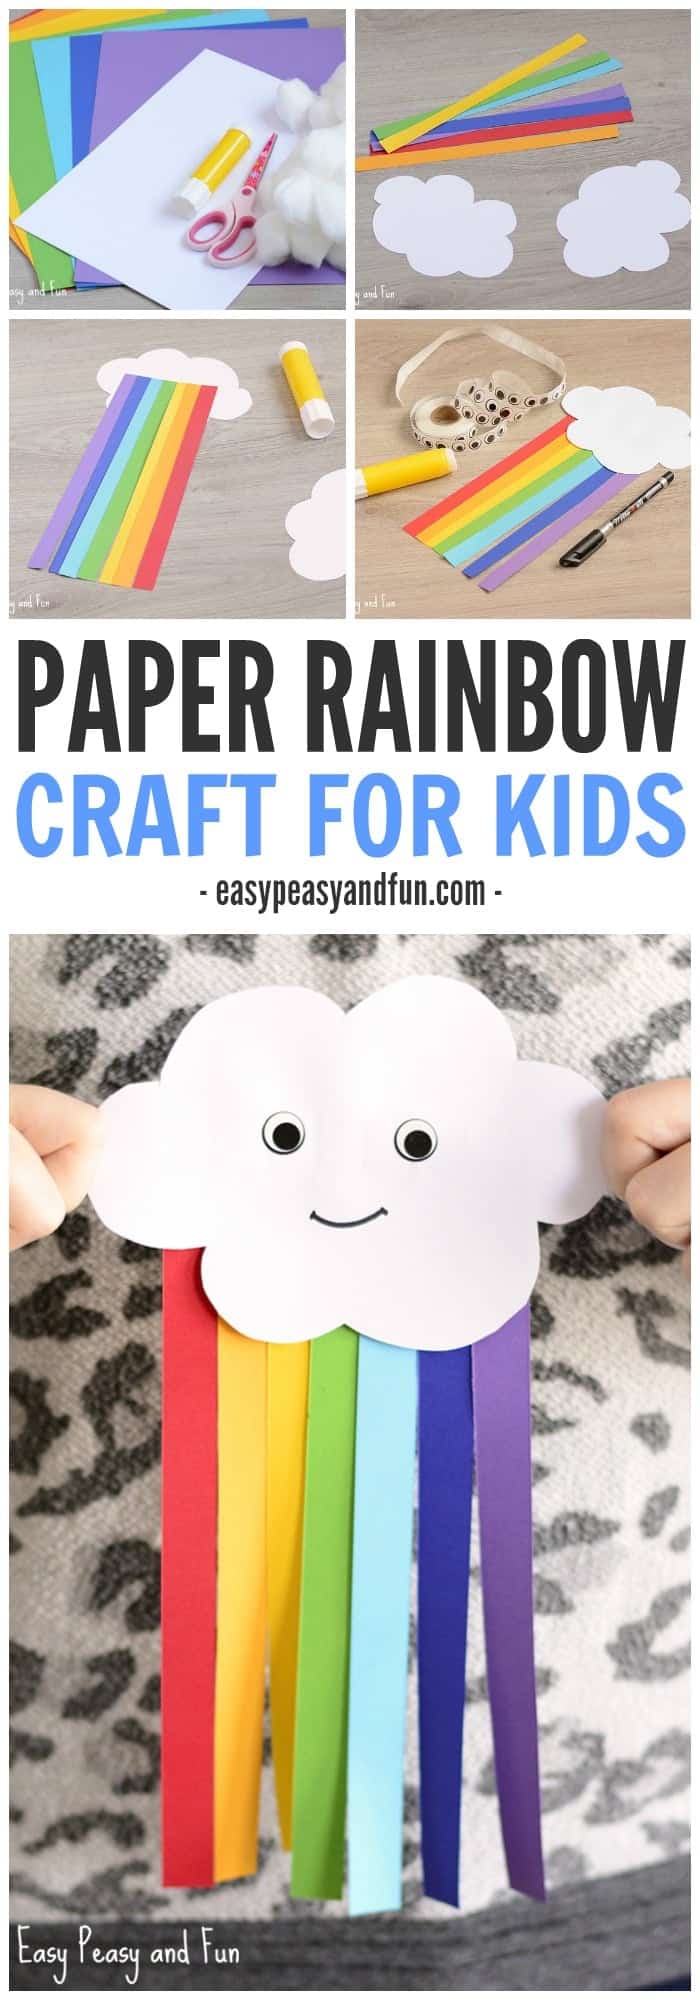 Paper rainbow craft